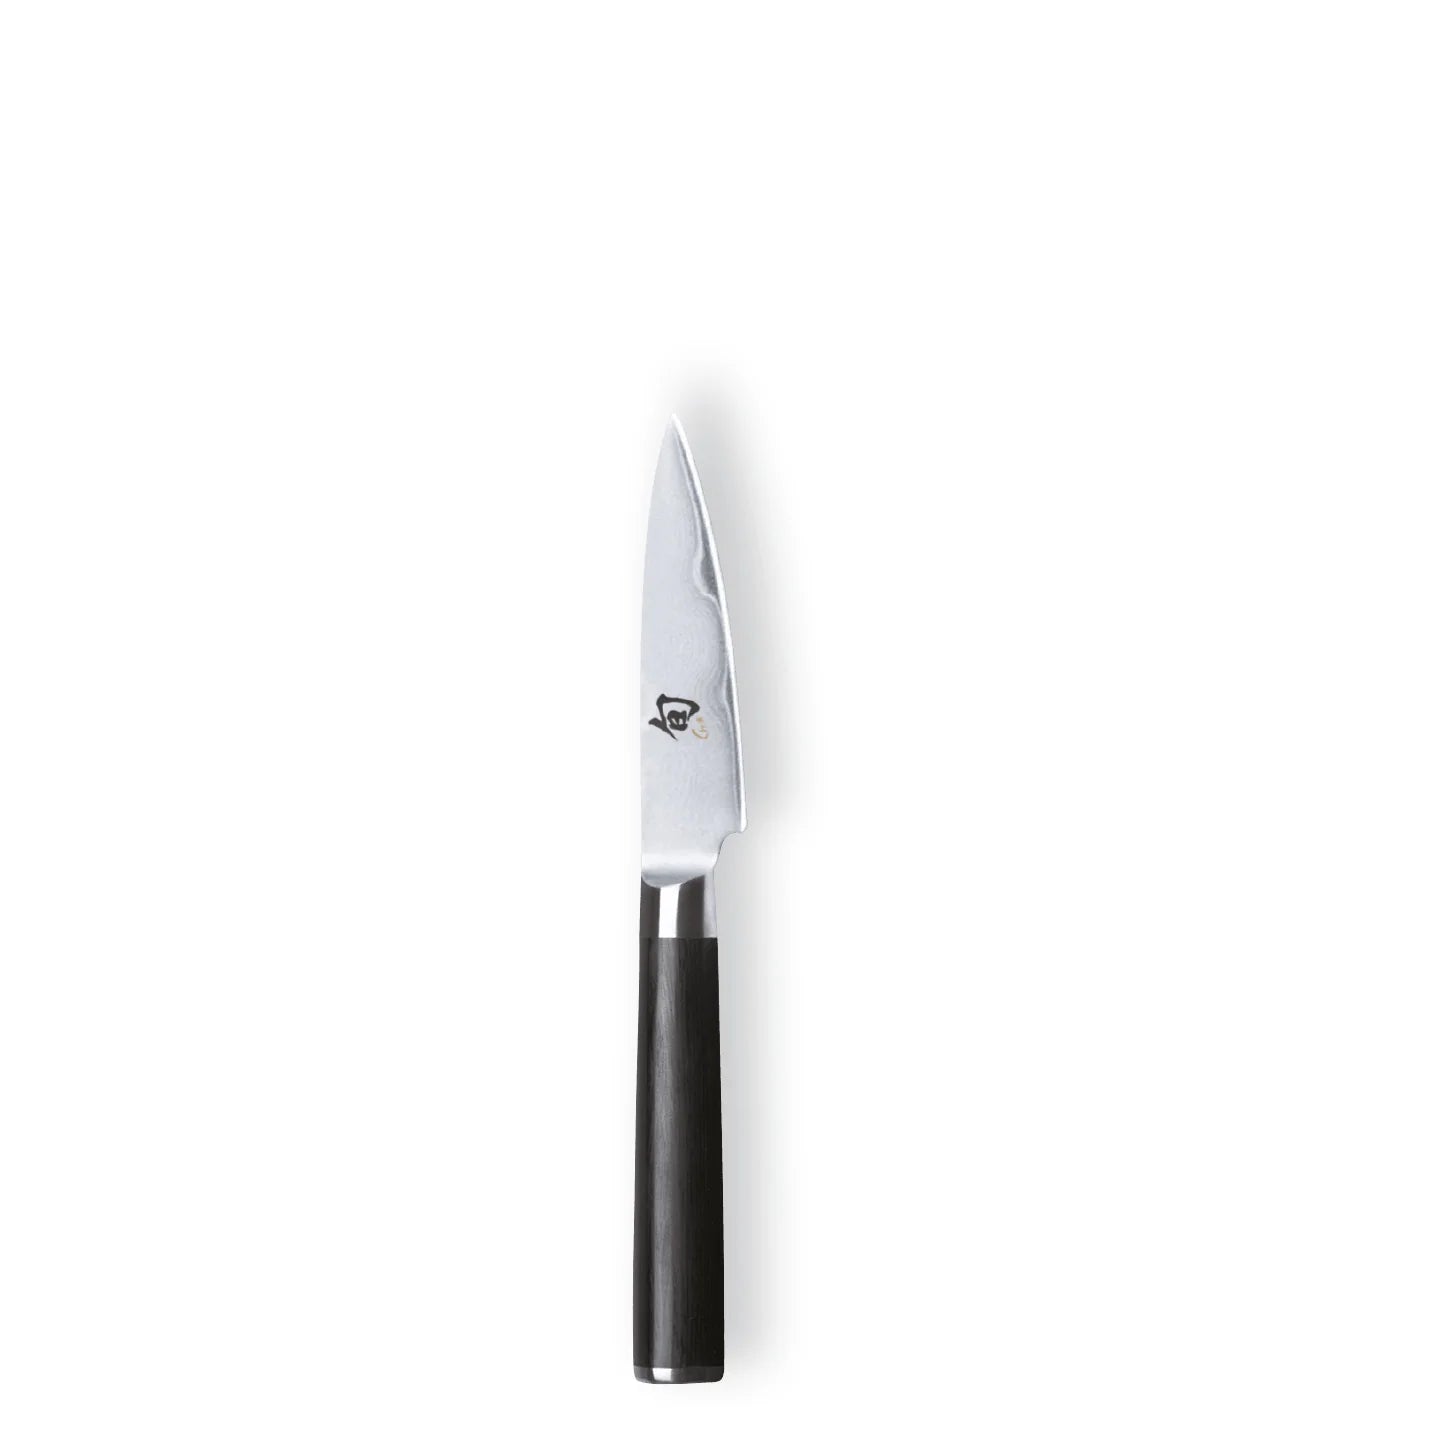 Kai Shun Classic Paring knife 9cm